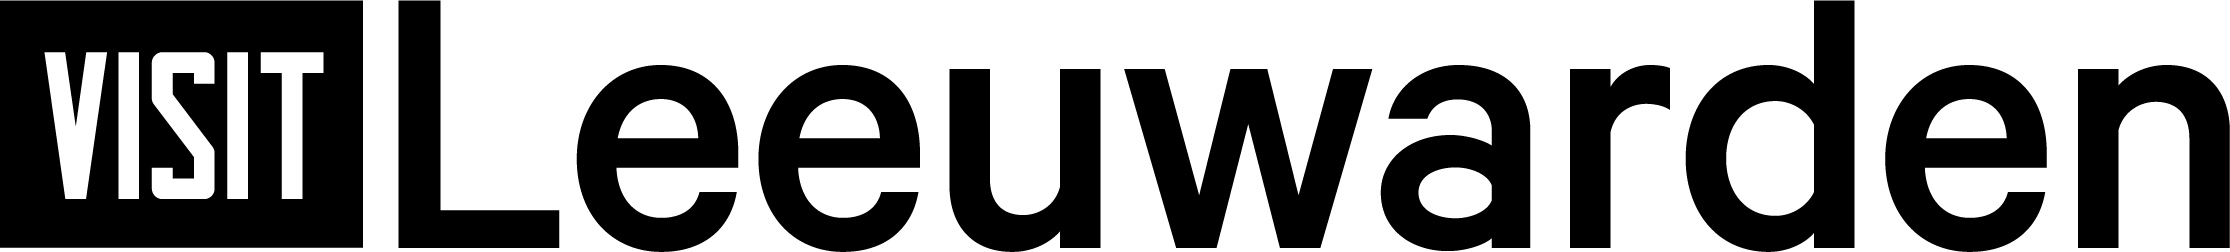 Visit Leeuwarden Logo